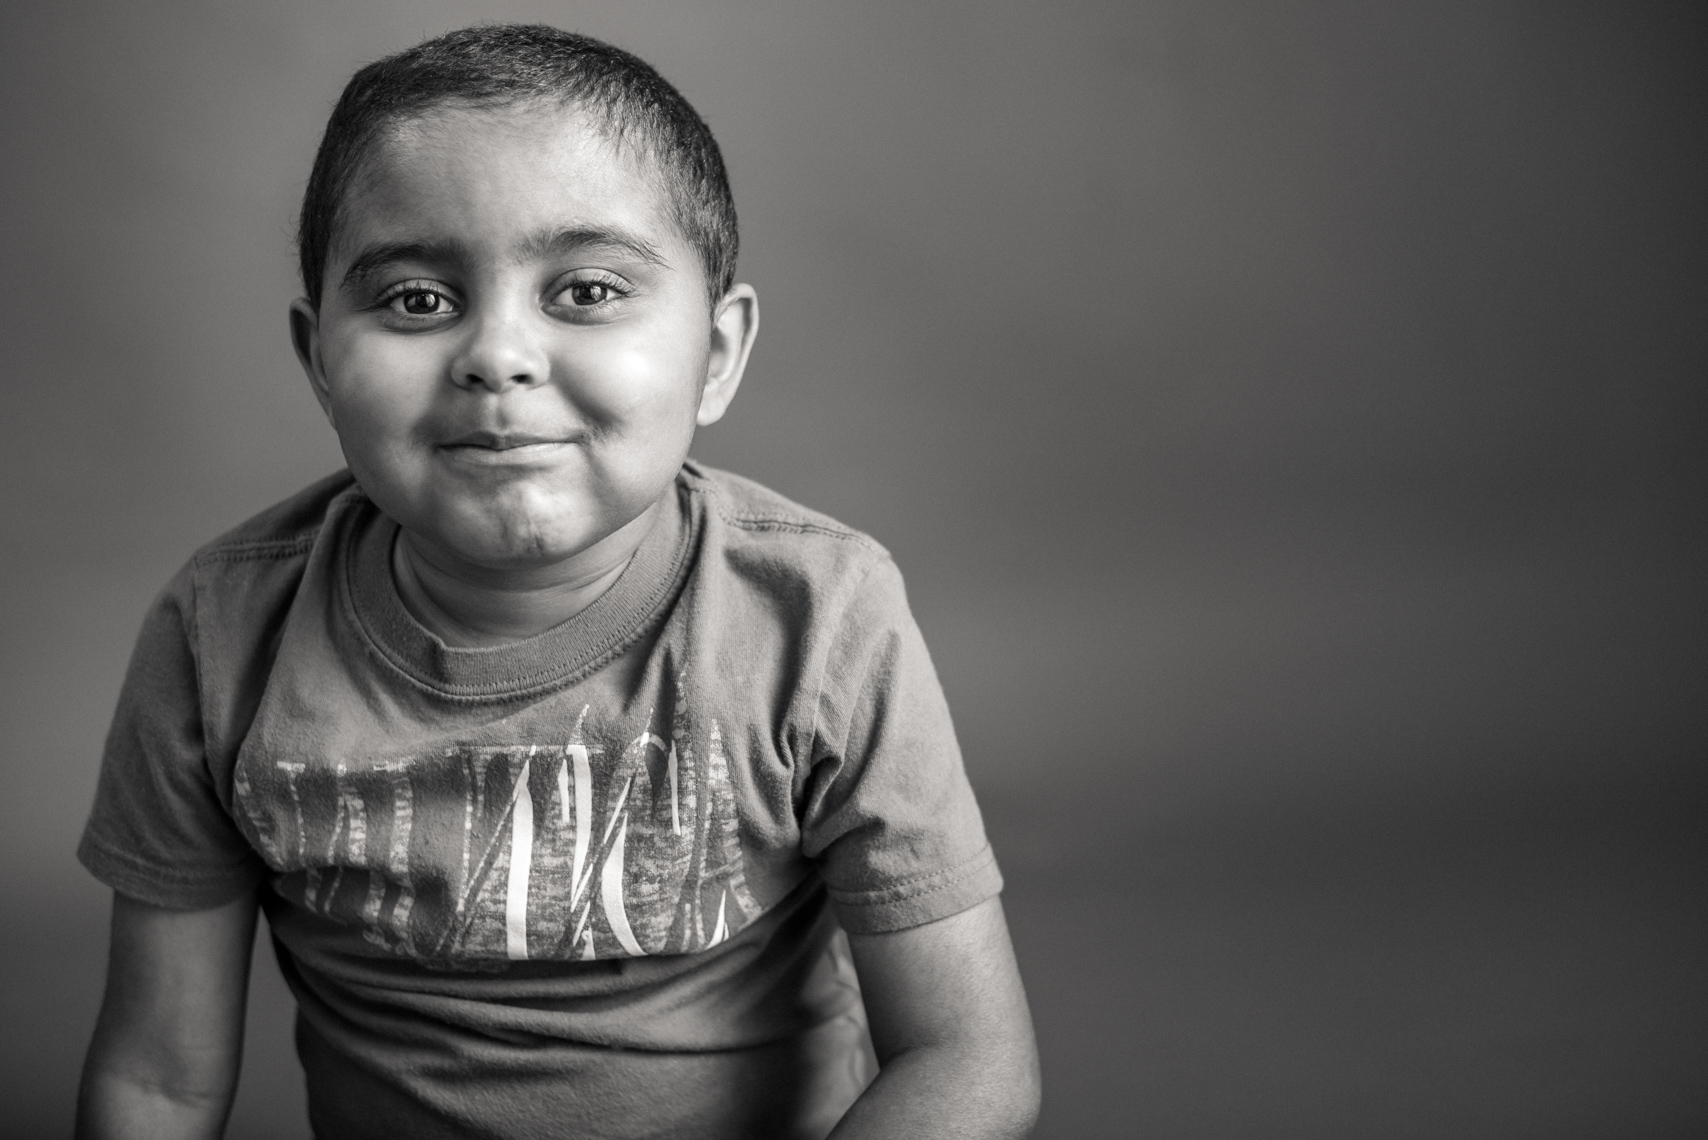 Flashes of Hope, humanitarian, non-profit, studio portrait of a young boy battling cancer at Vanderbilt Children